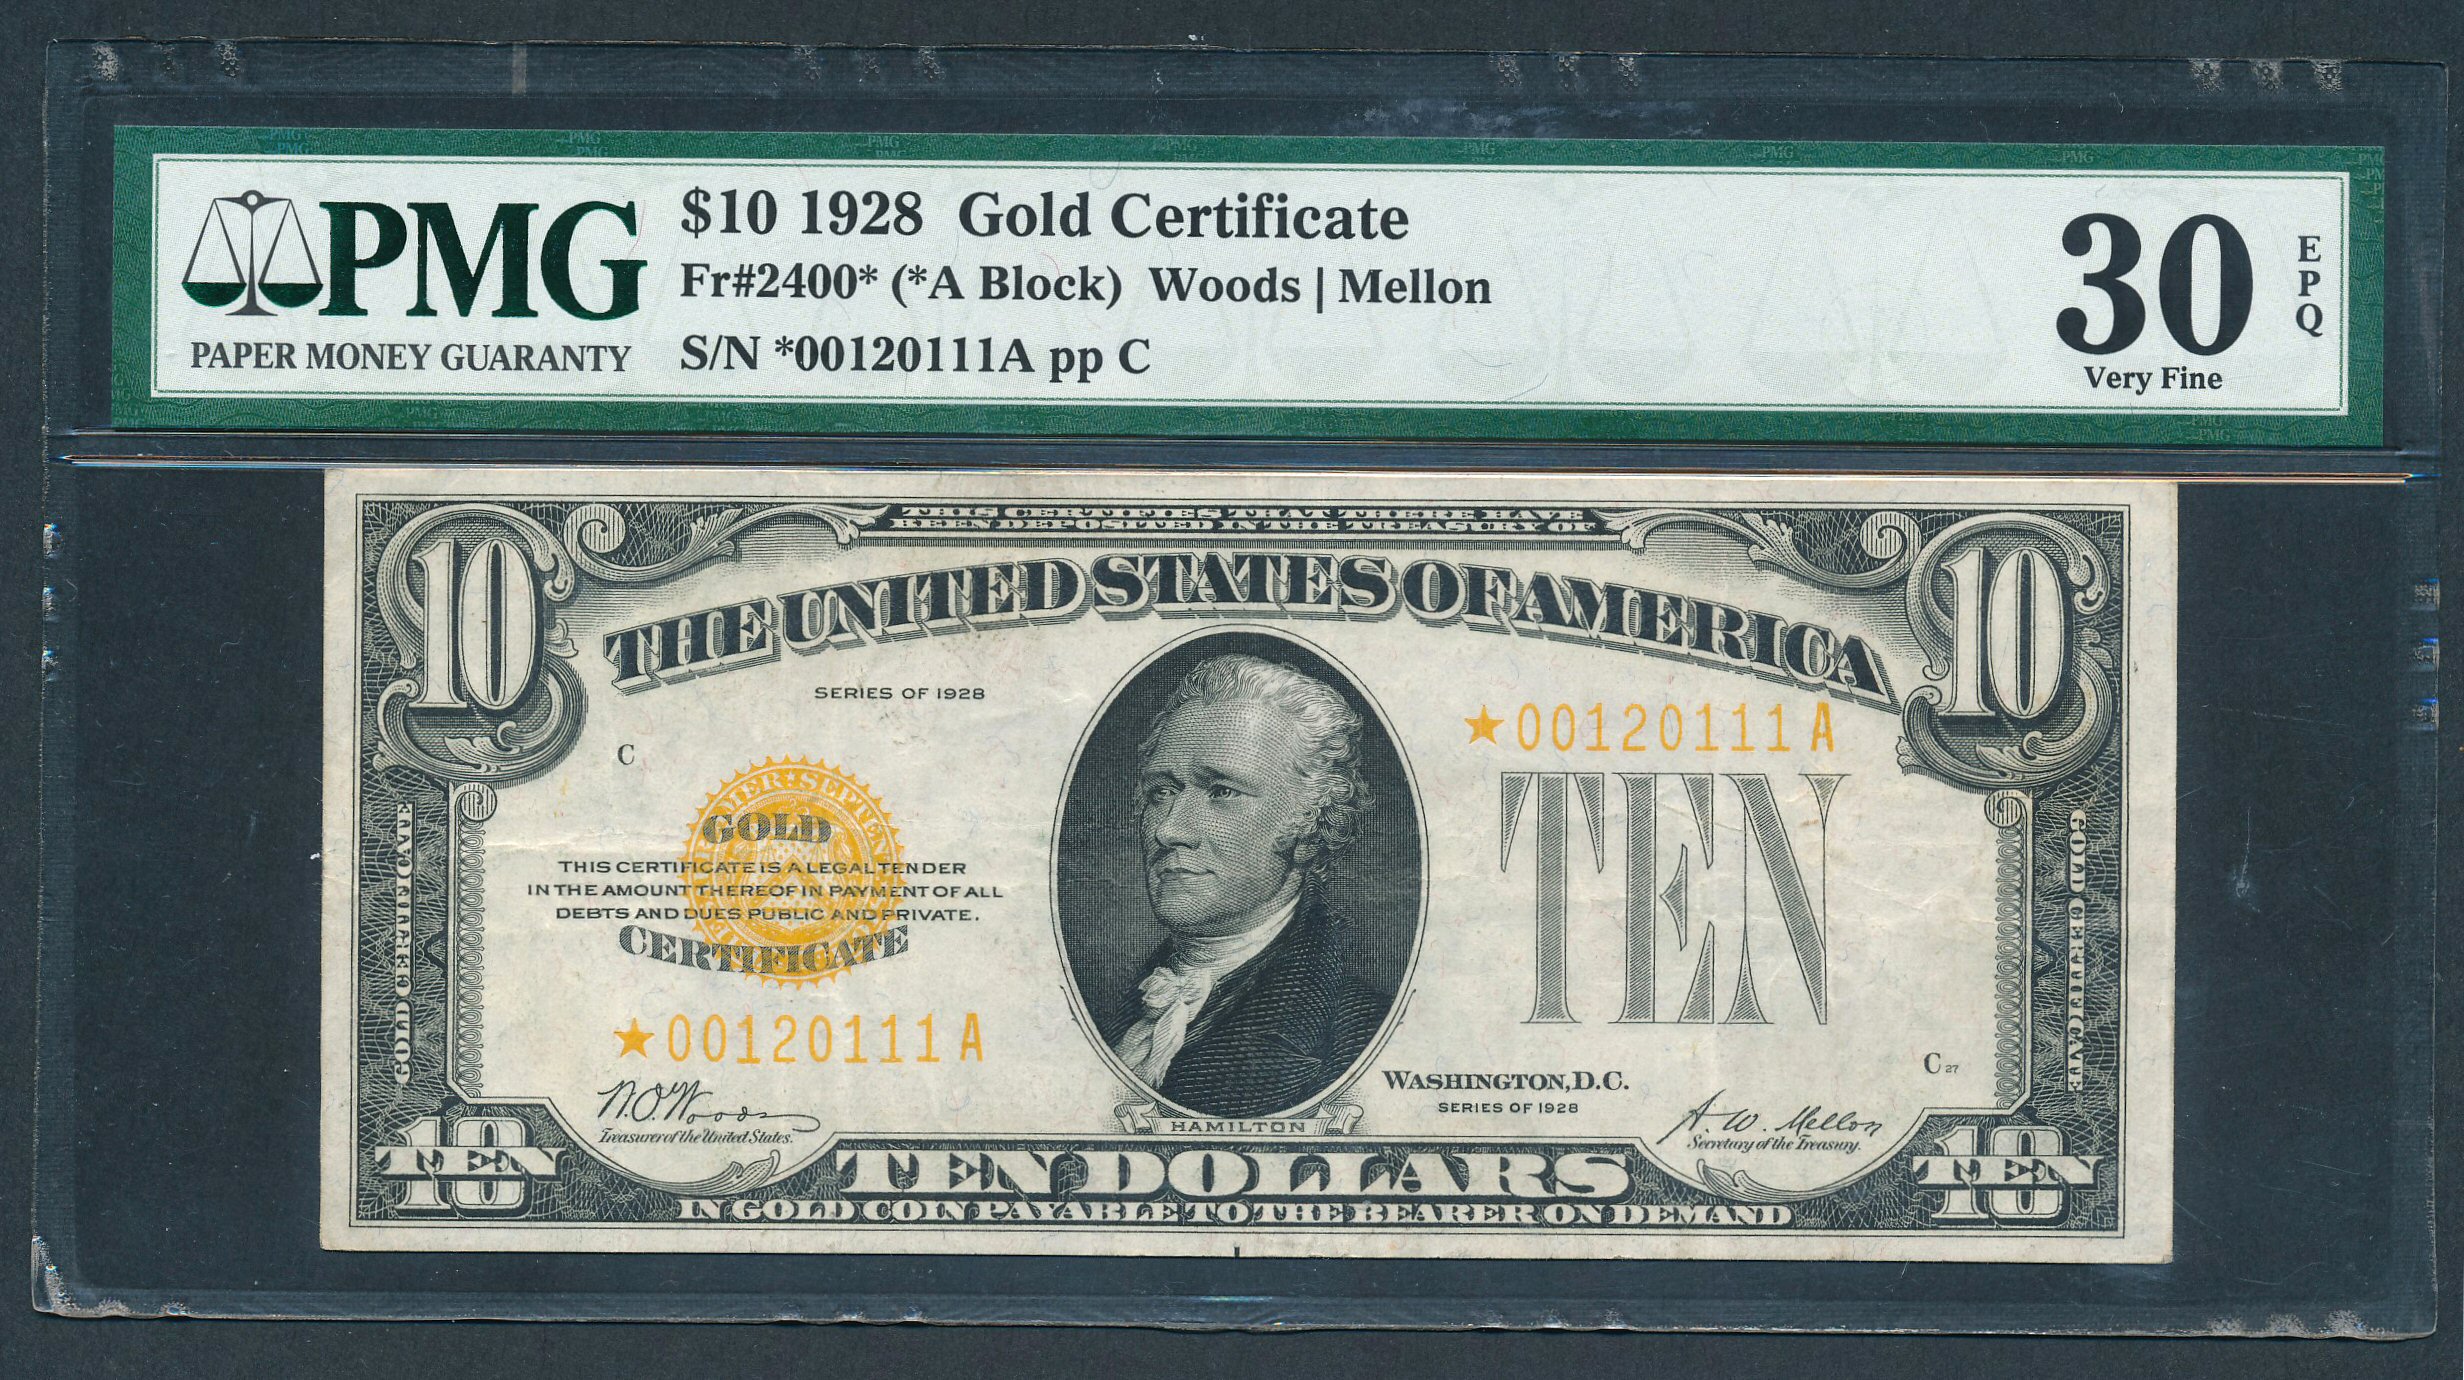 Fr. 2400 1928 10 – Gold Certificate